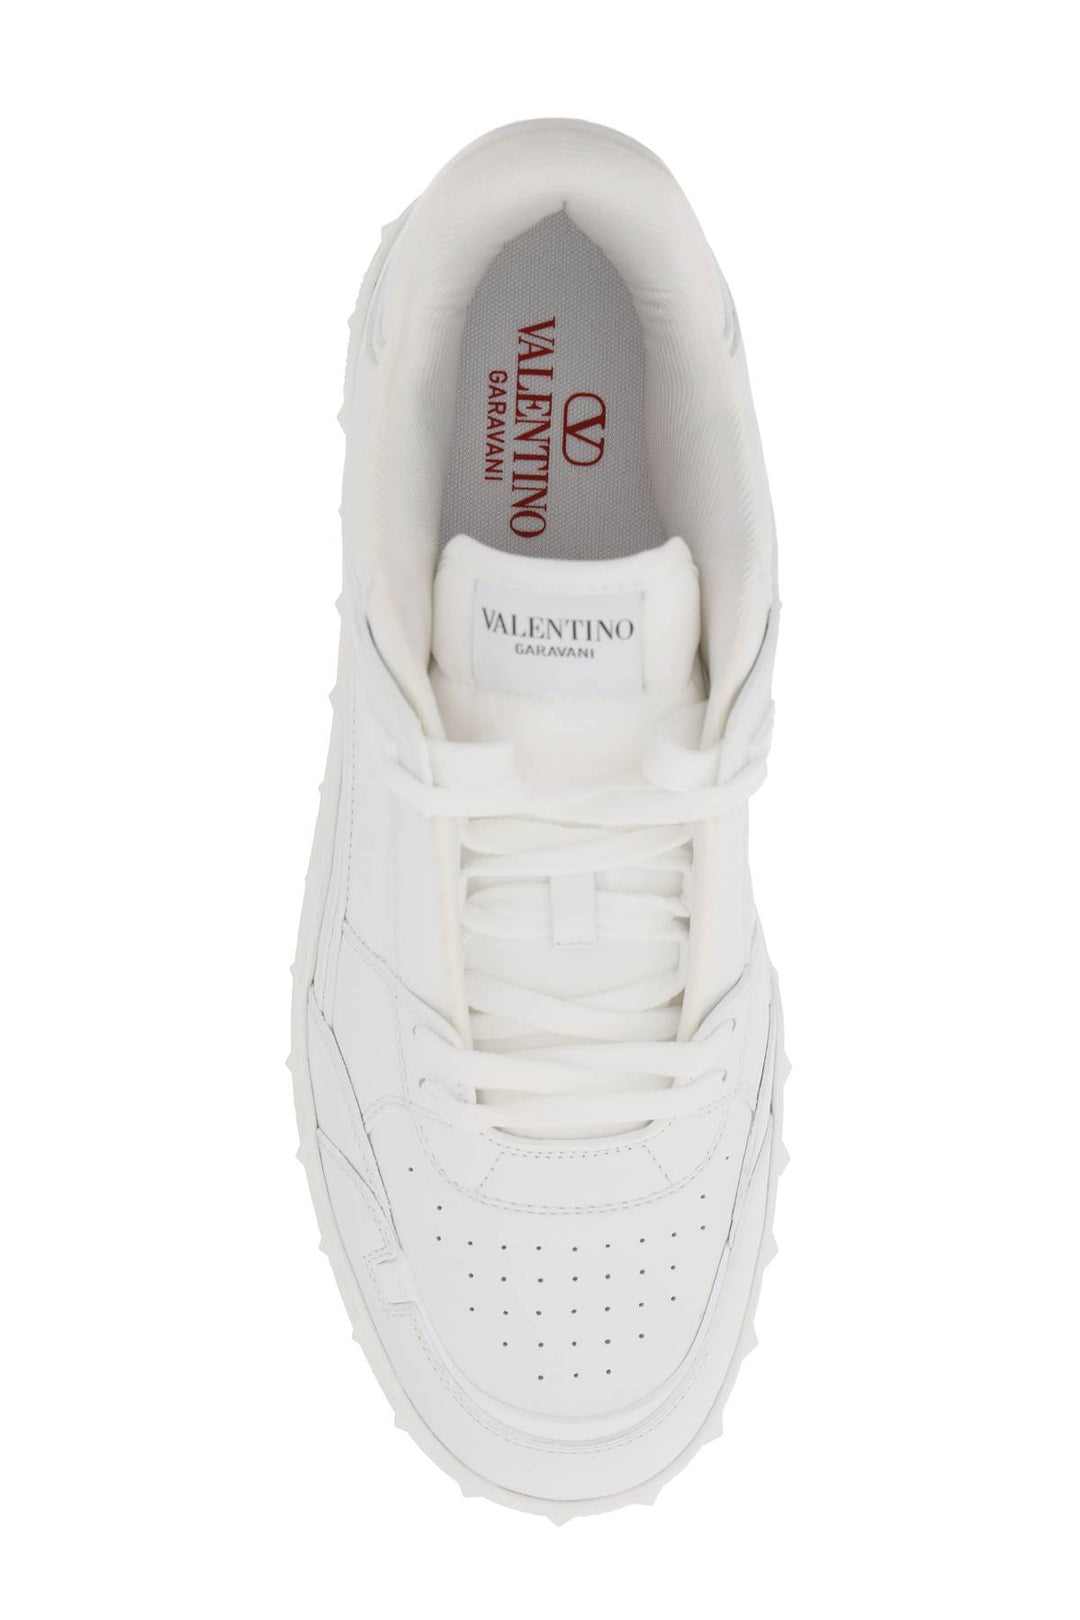 Valentino Garavani Freedots Low Top Sneakers   Bianco